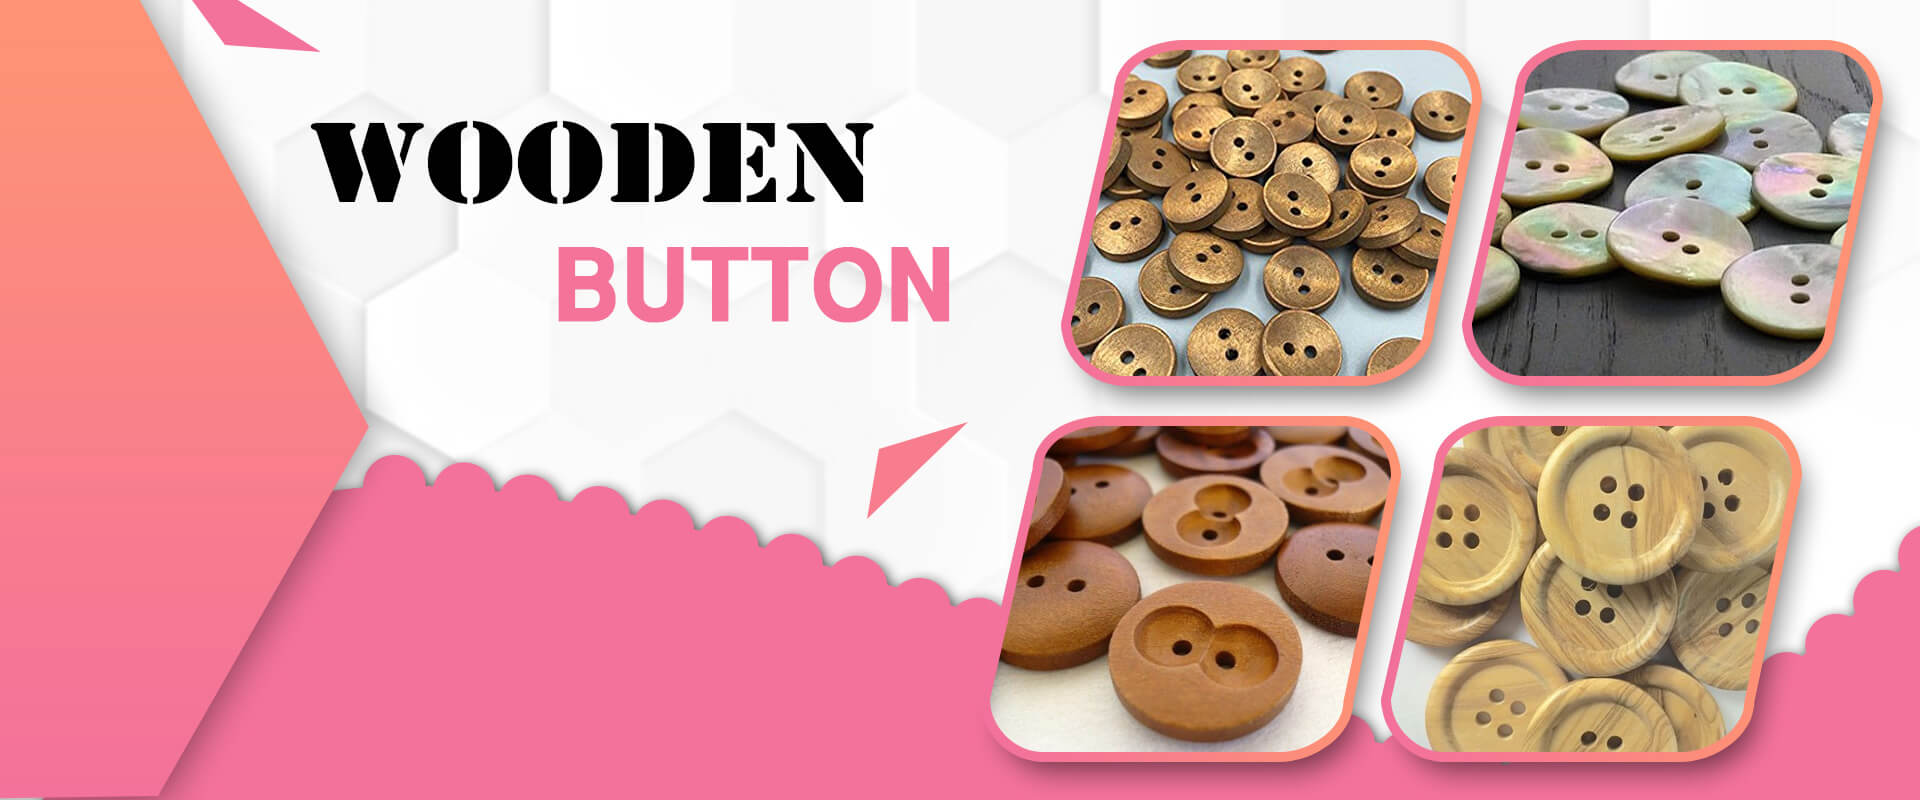 Wooden Button